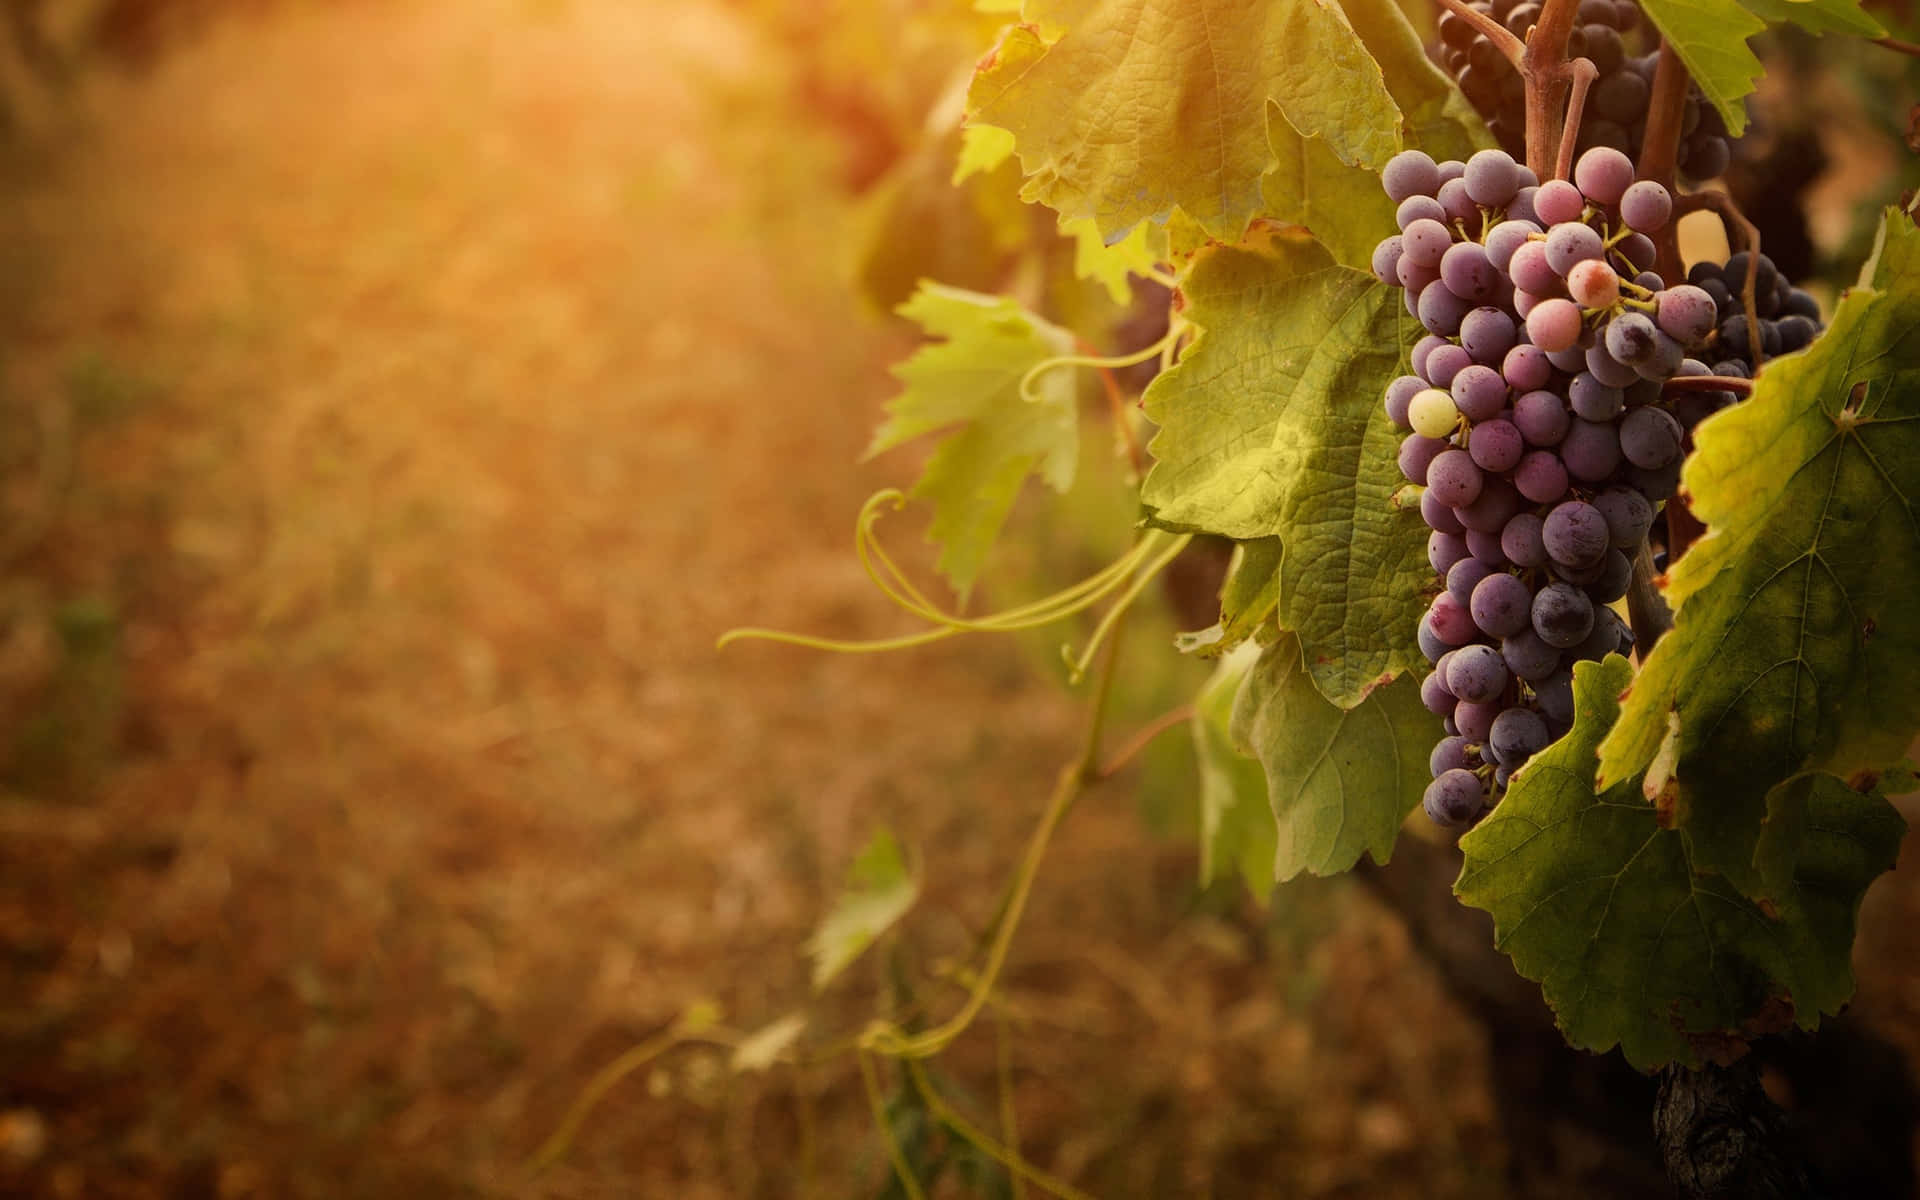 Fresh grape bunches in a vineyard